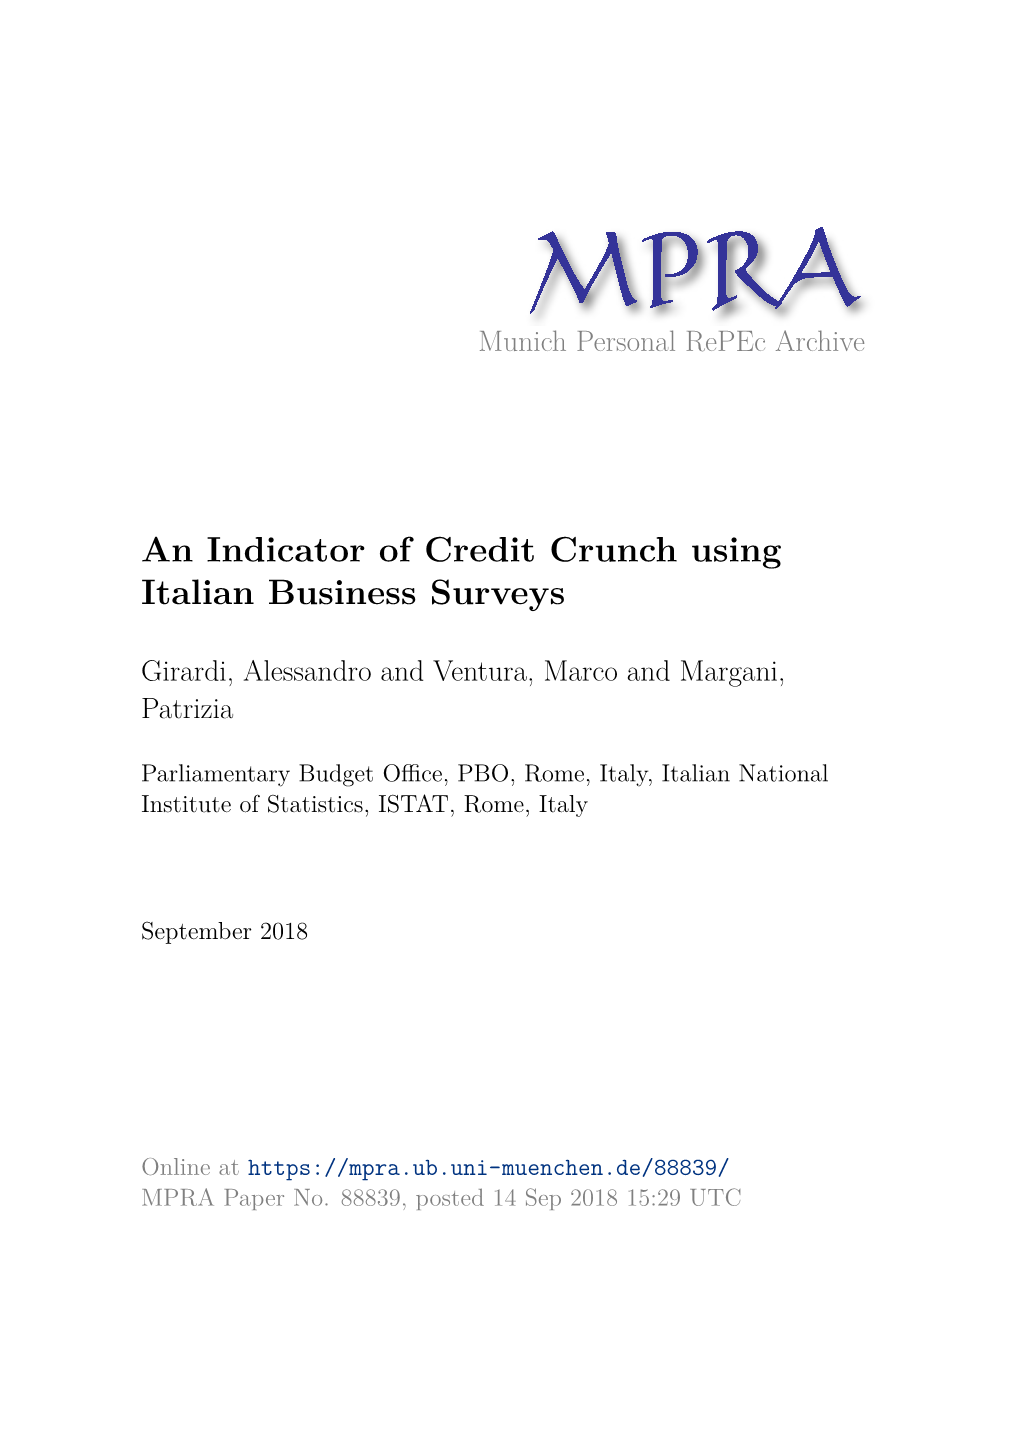 An Indicator of Credit Crunch Using Italian Business Surveys